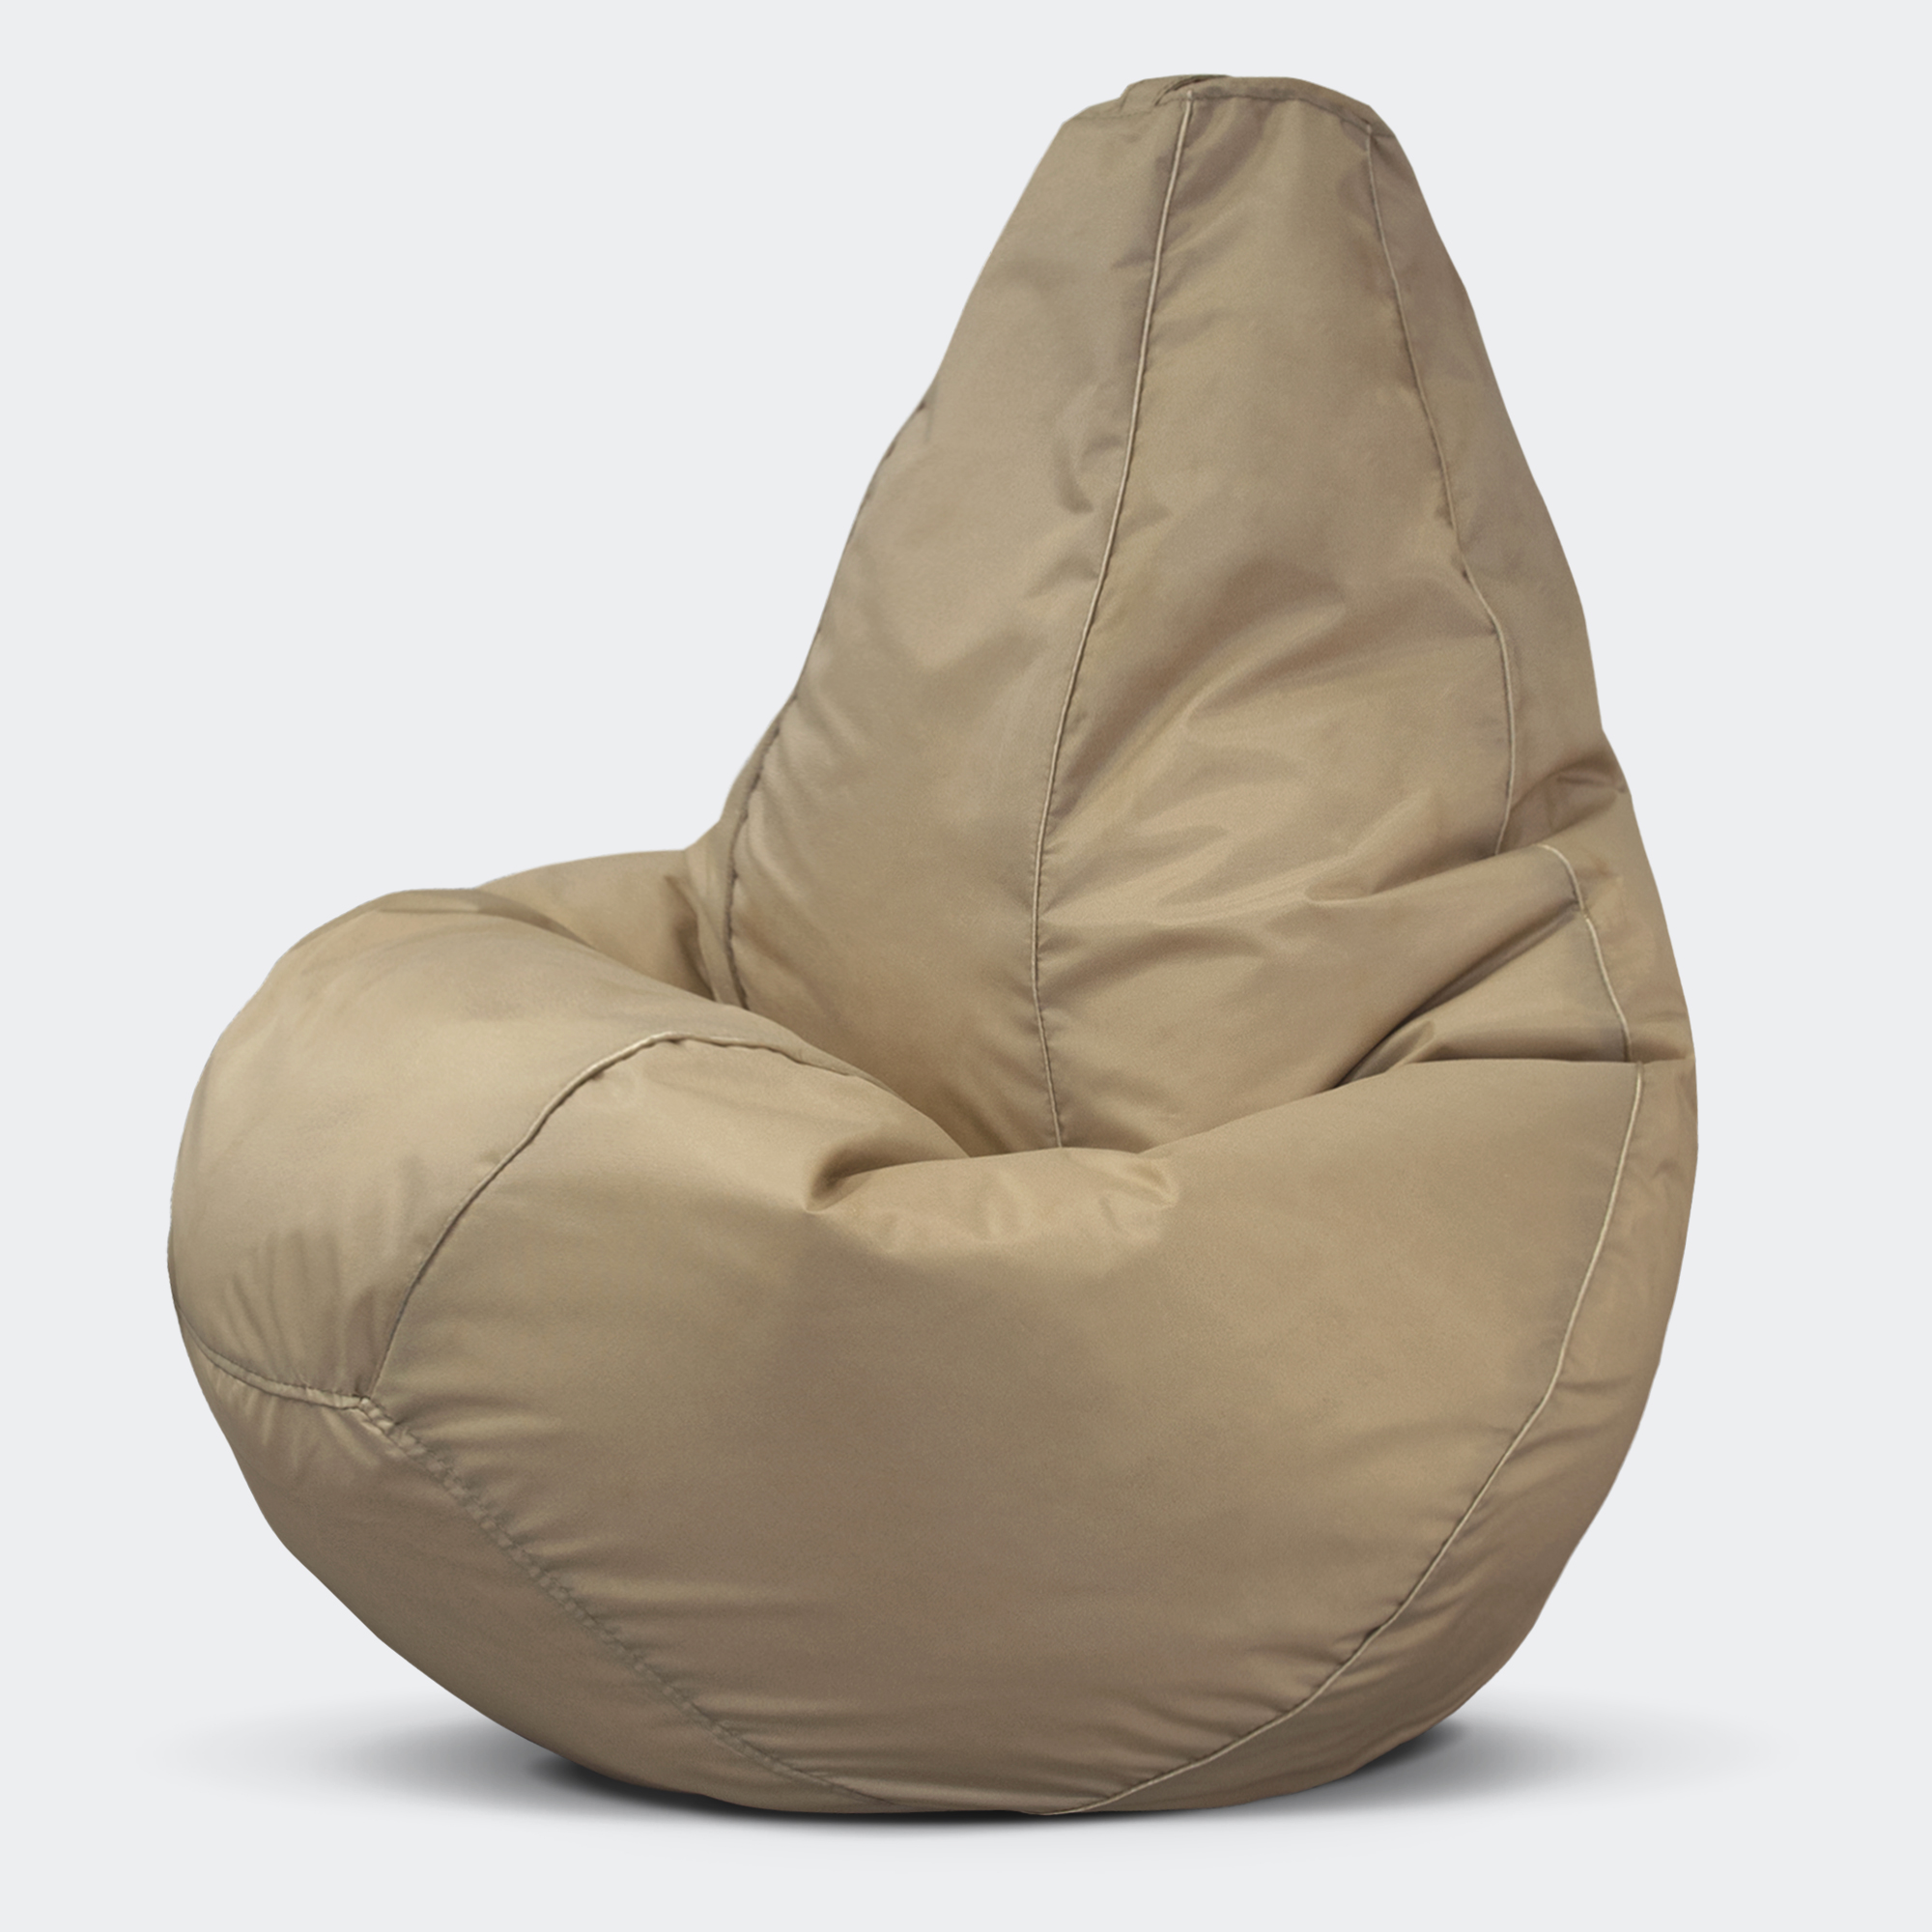 фото Кресло-мешок puflove пуфик груша, размер xxxl, бежевый оксфорд